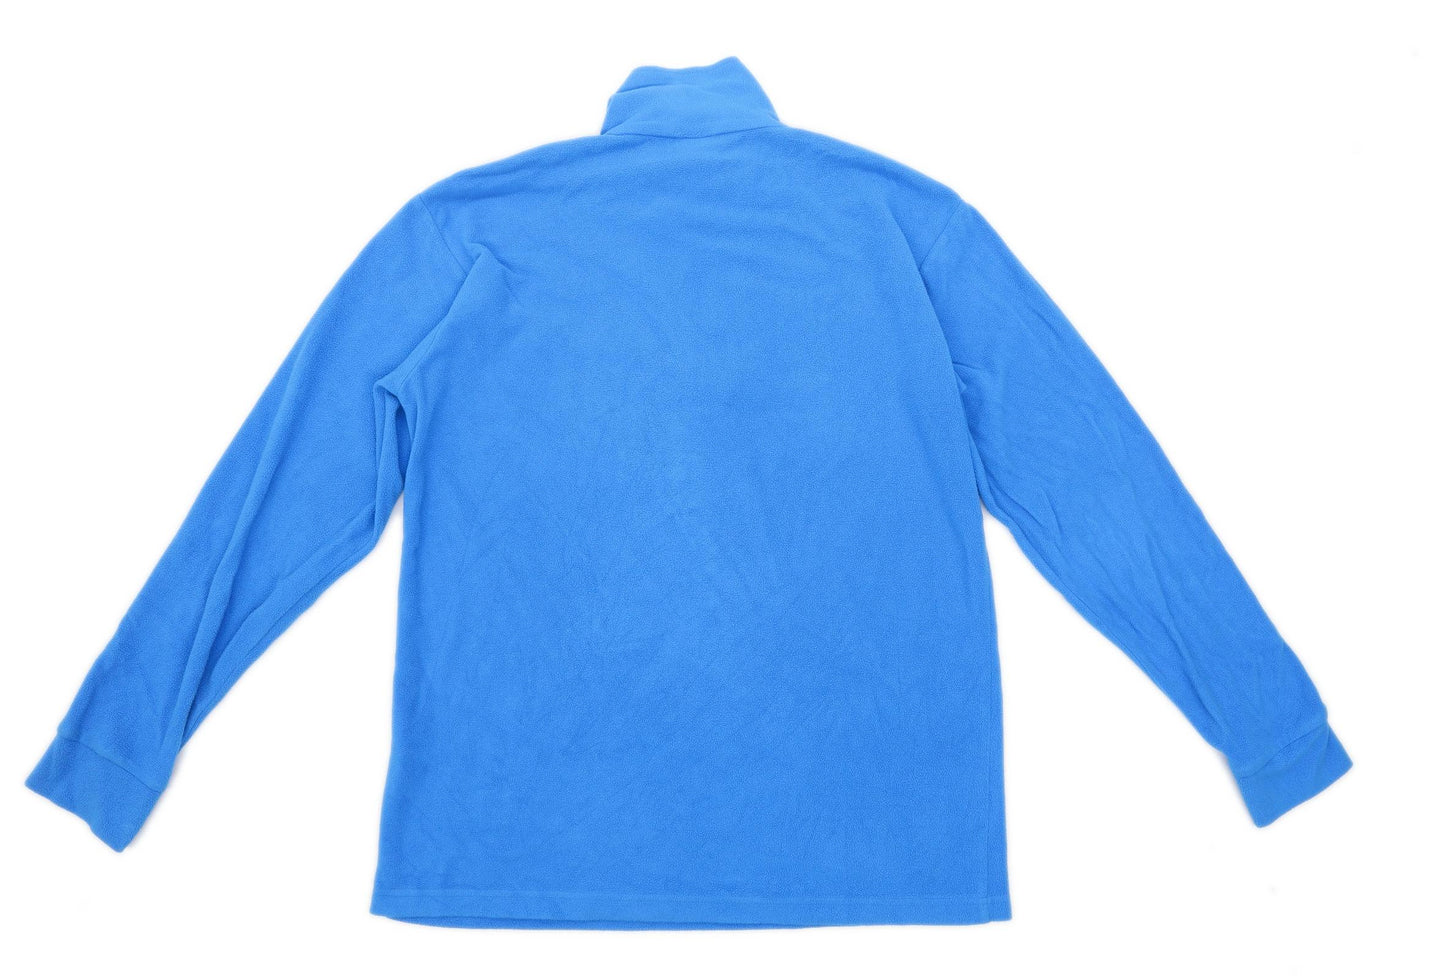 Trespass Mens Size M Fleece Blue Jacket